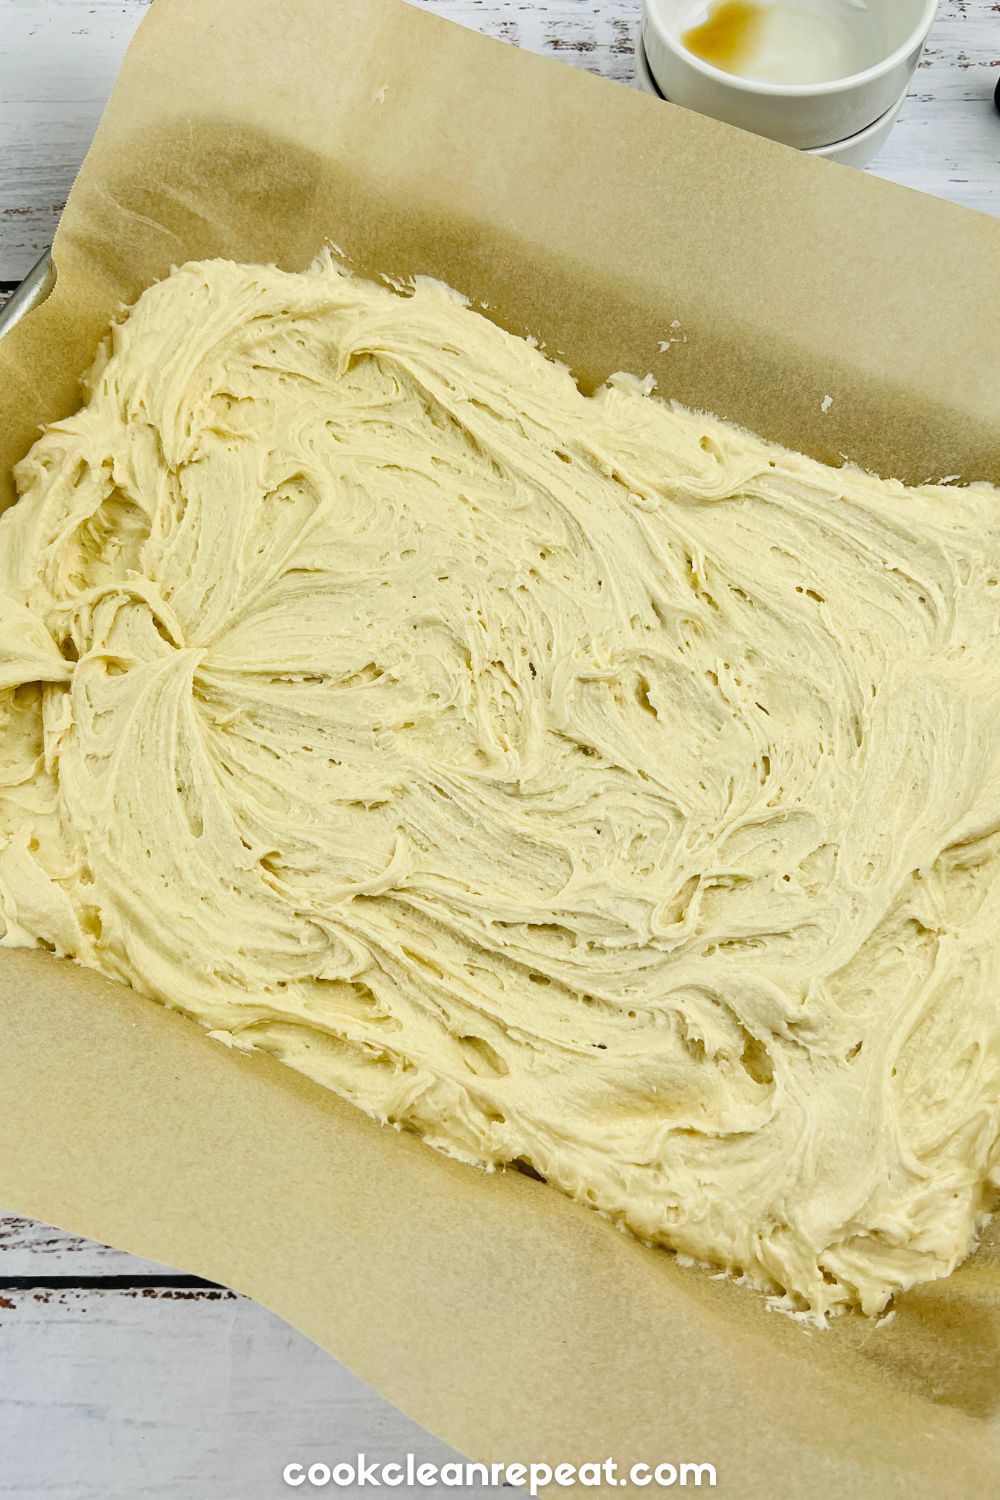 the raw dough in a baking pan